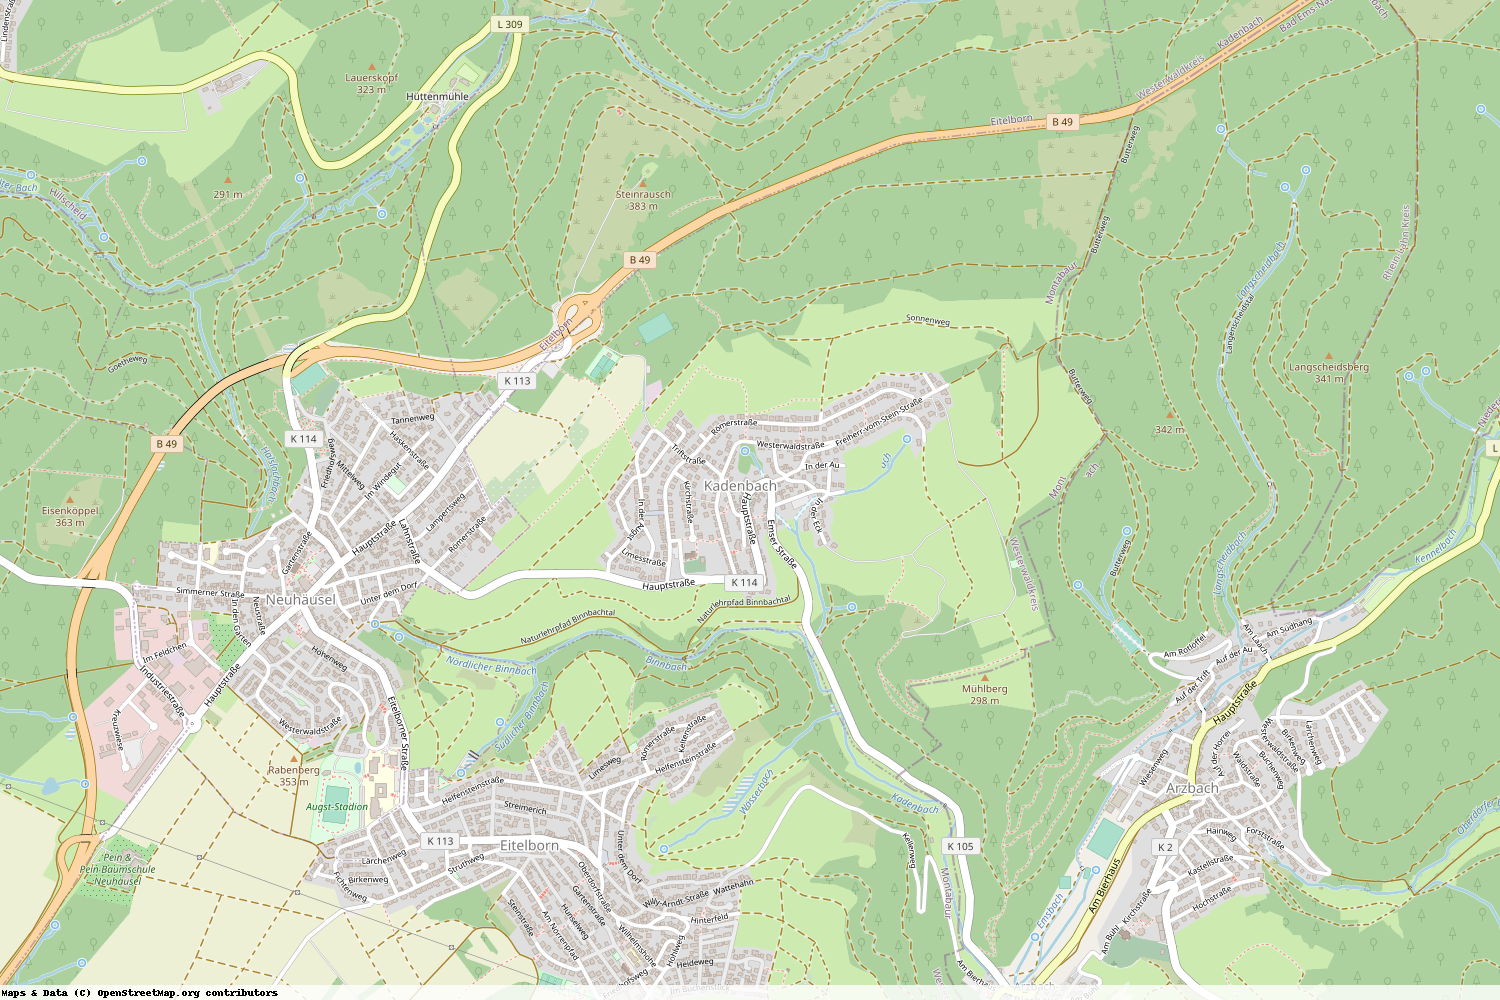 Ist gerade Stromausfall in Rheinland-Pfalz - Westerwaldkreis - Kadenbach?